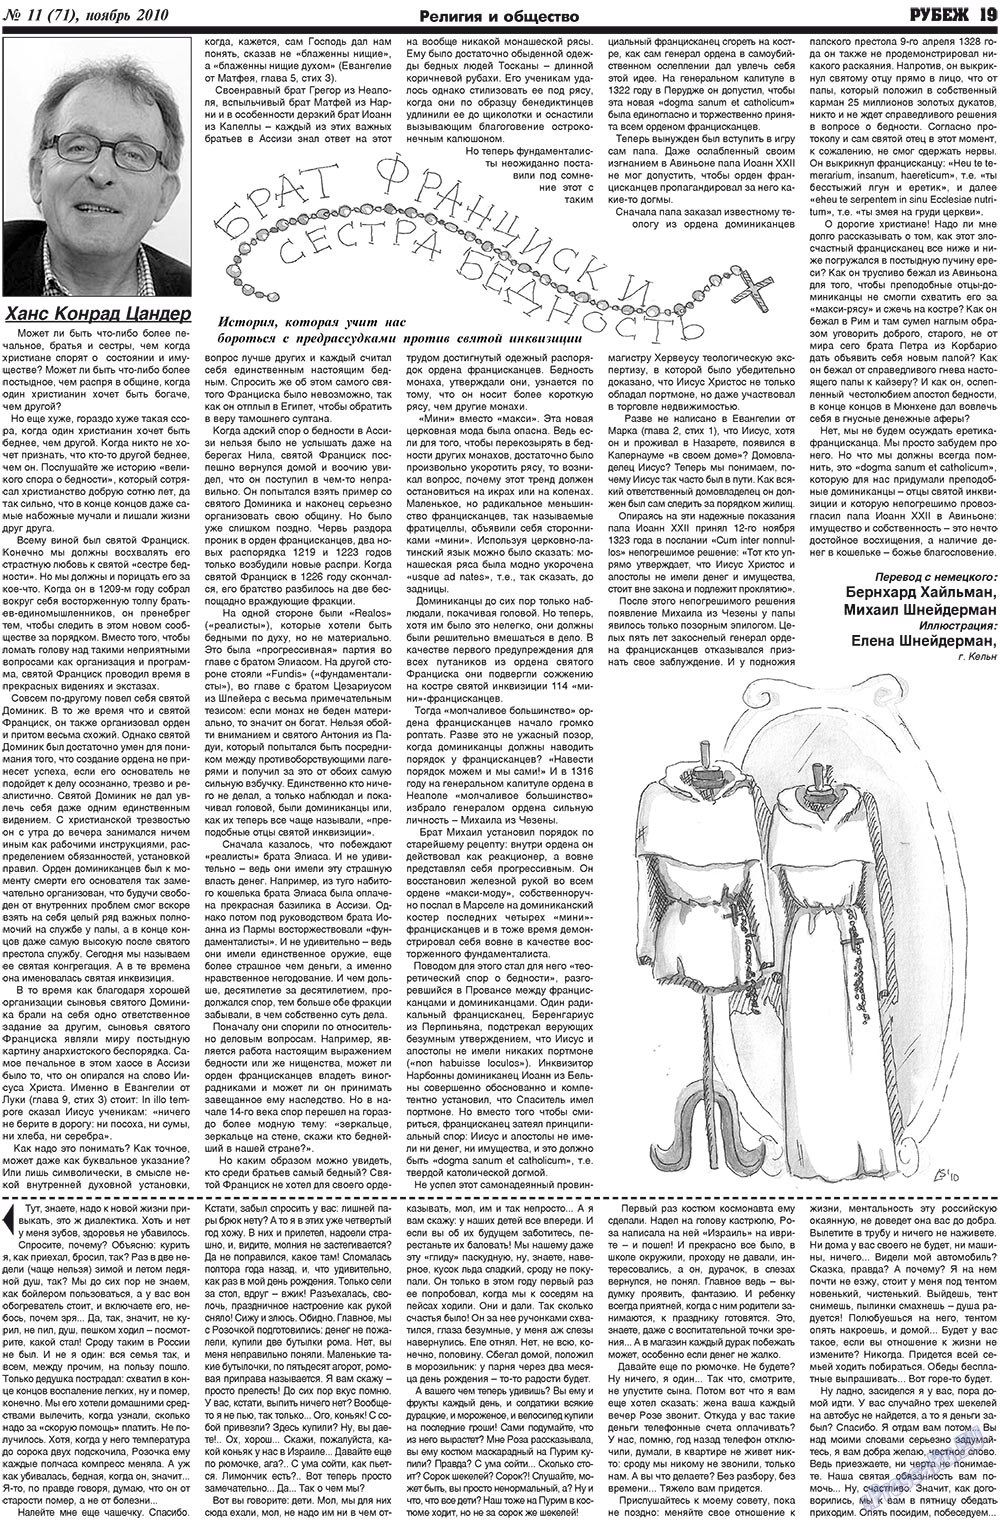 Рубеж, газета. 2010 №11 стр.19